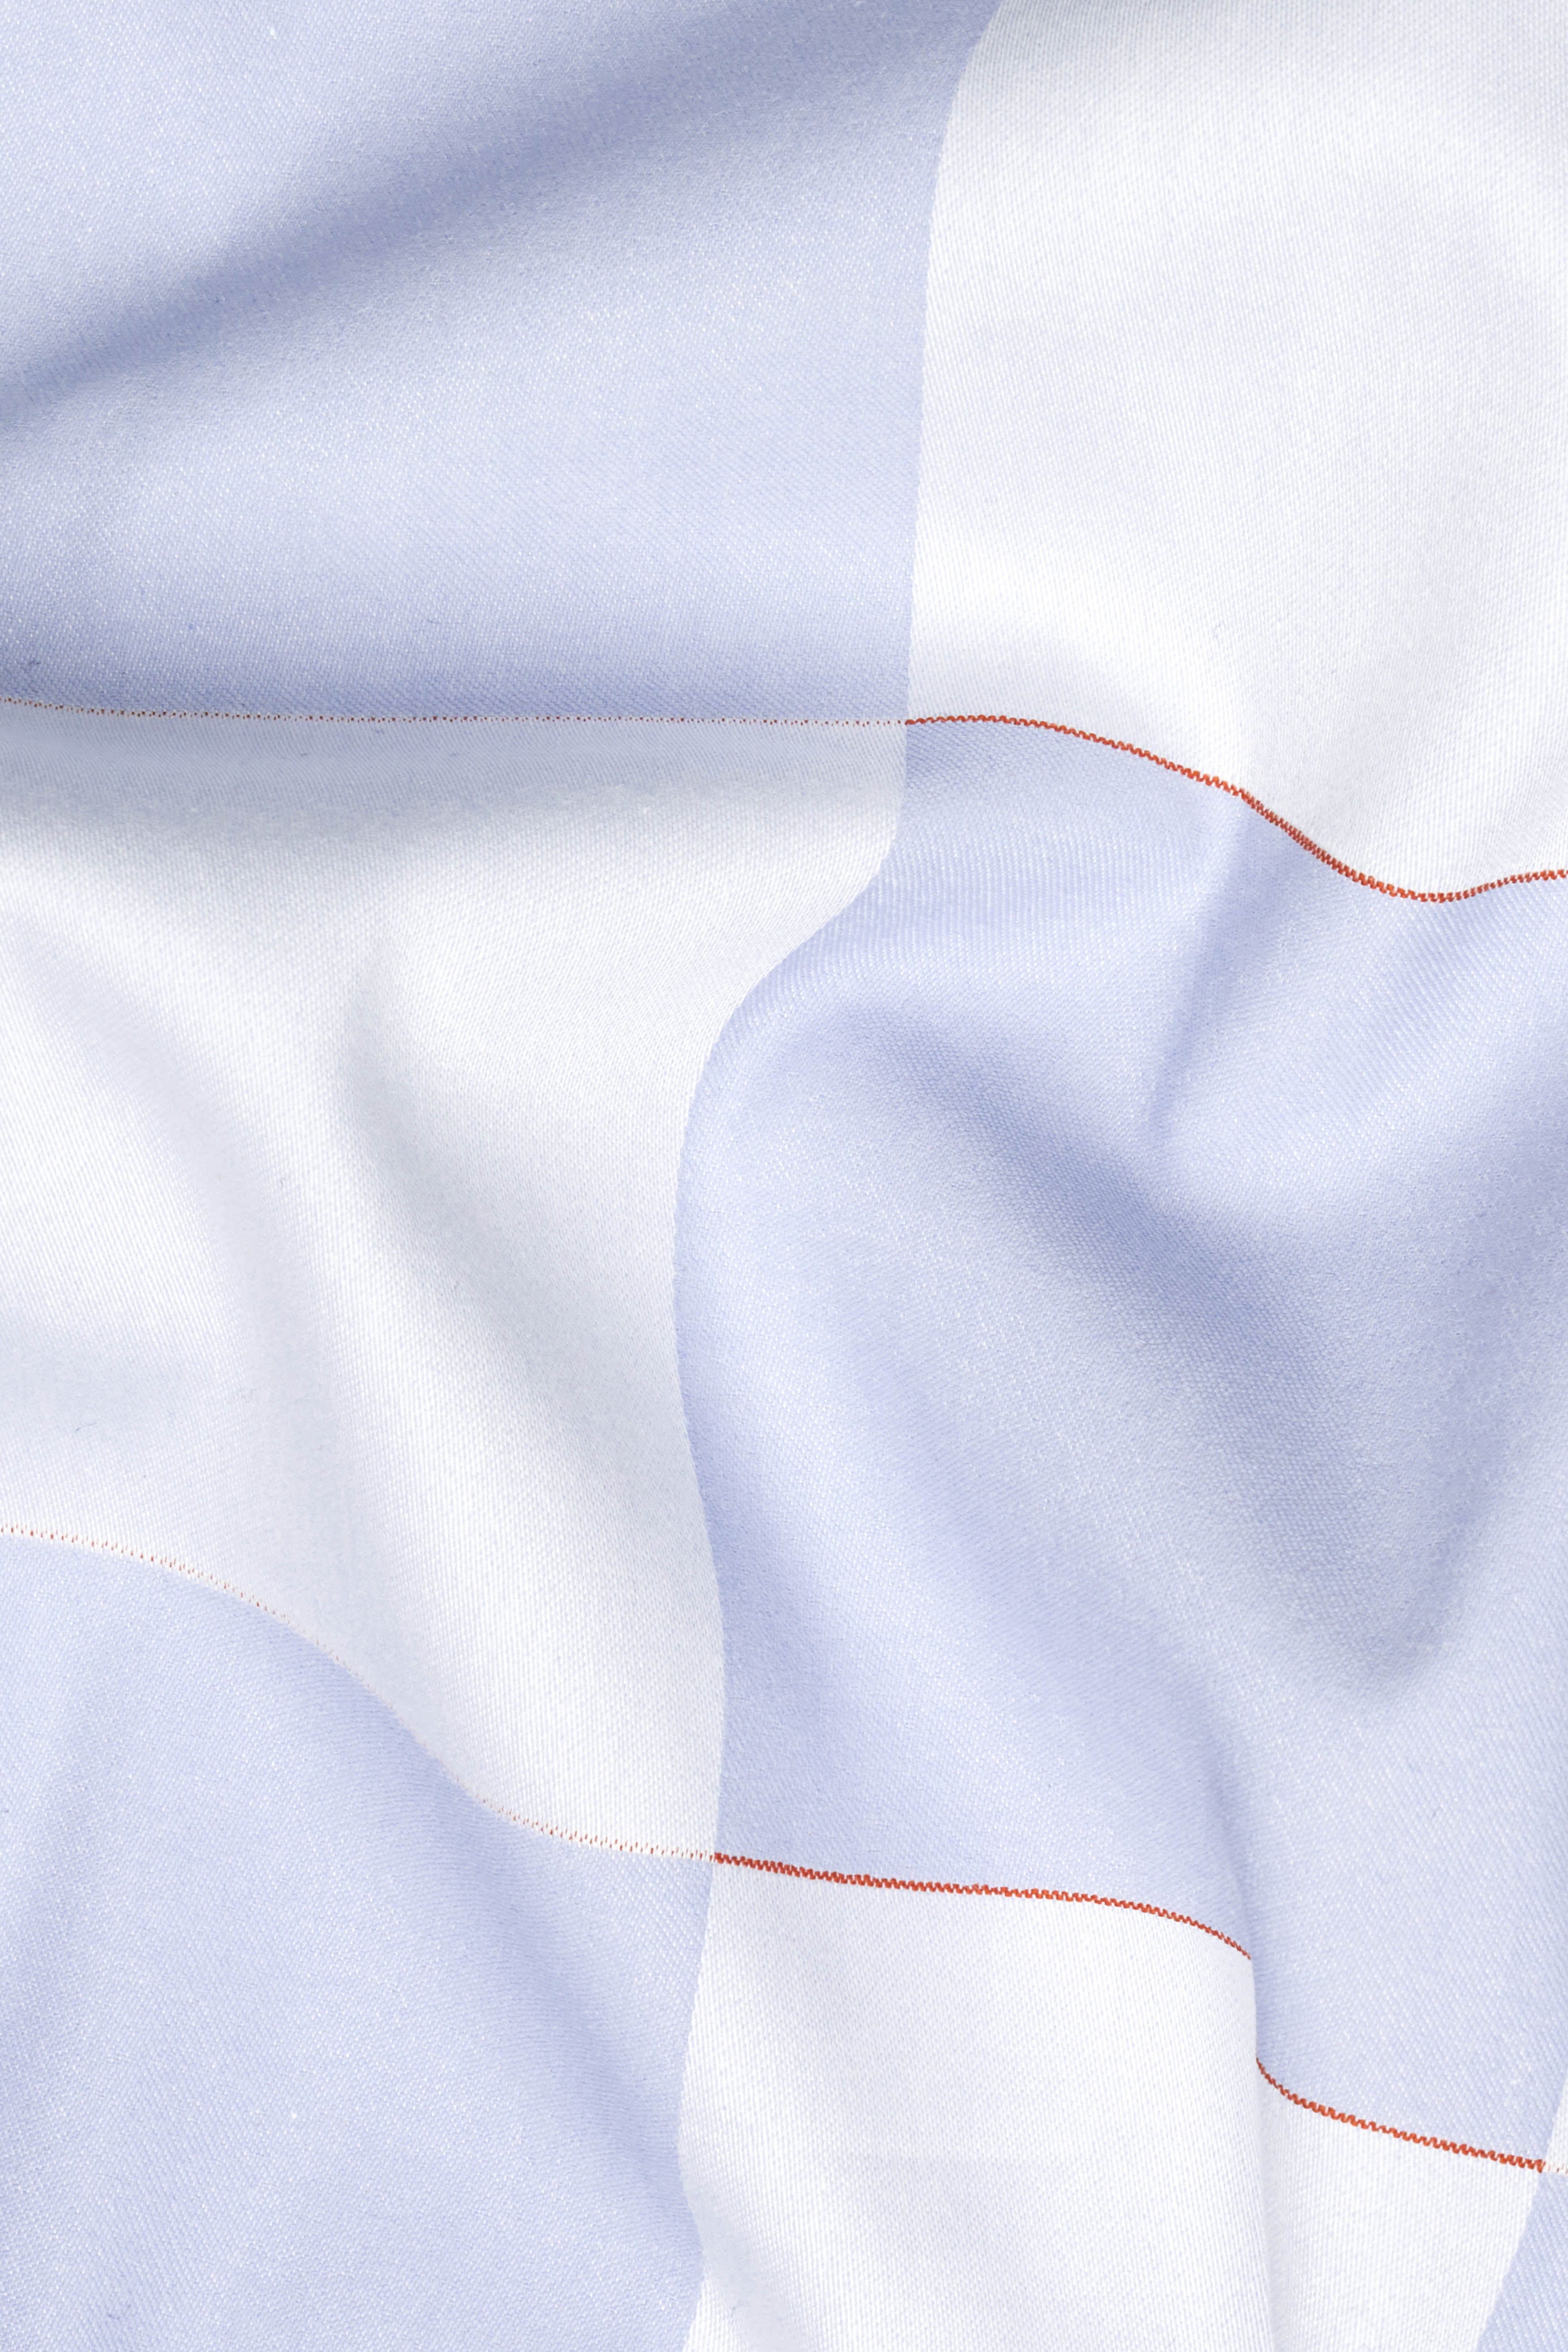 Bright White and Tealish Lavender Checked Jacquard Textured Premium Giza Cotton Shirt